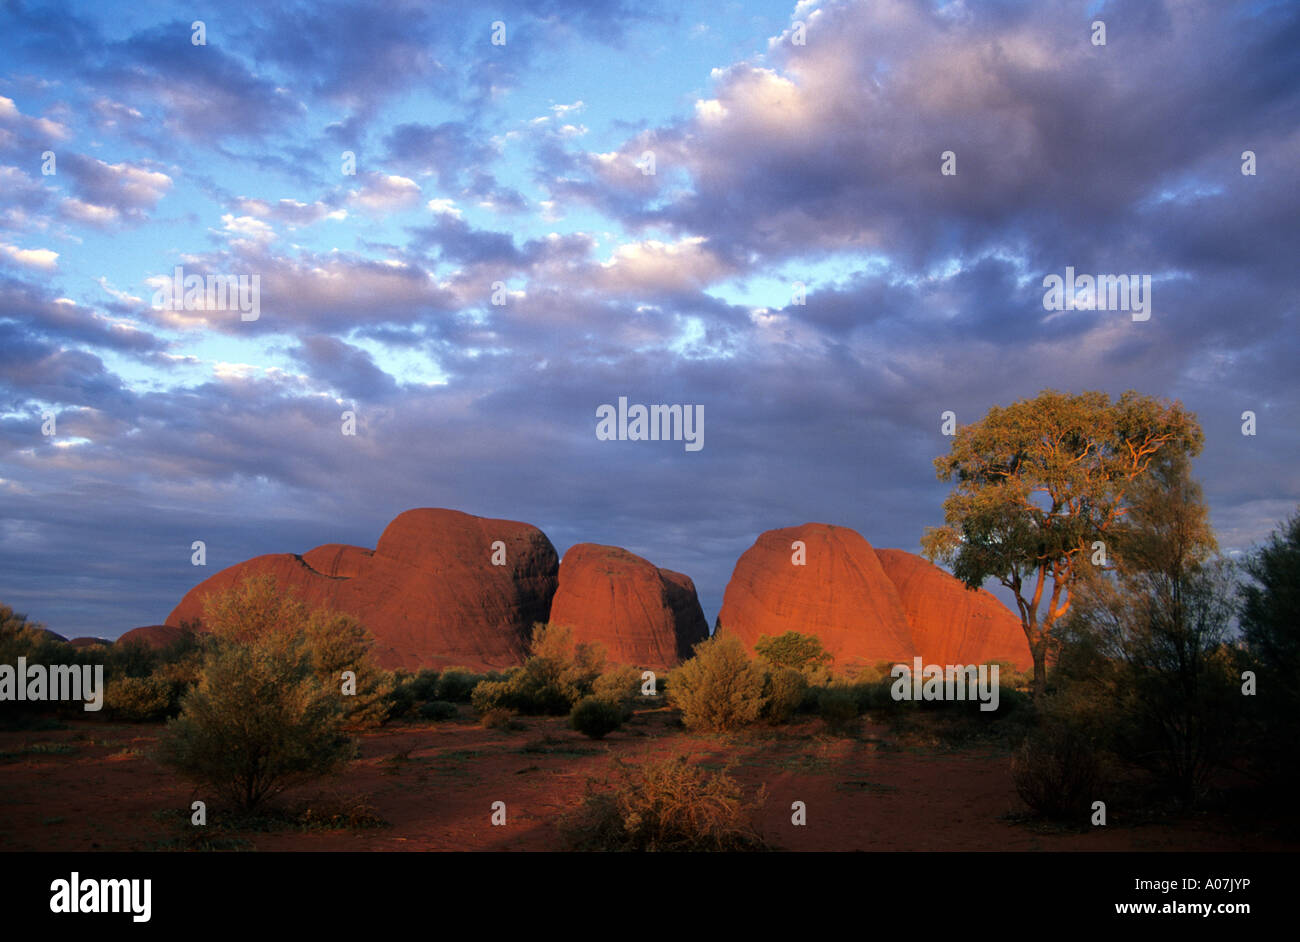 Sunset at Kata Tjuta (The Olga’s) in the Uluru National Park, Northern Territory, Australia. Stock Photo